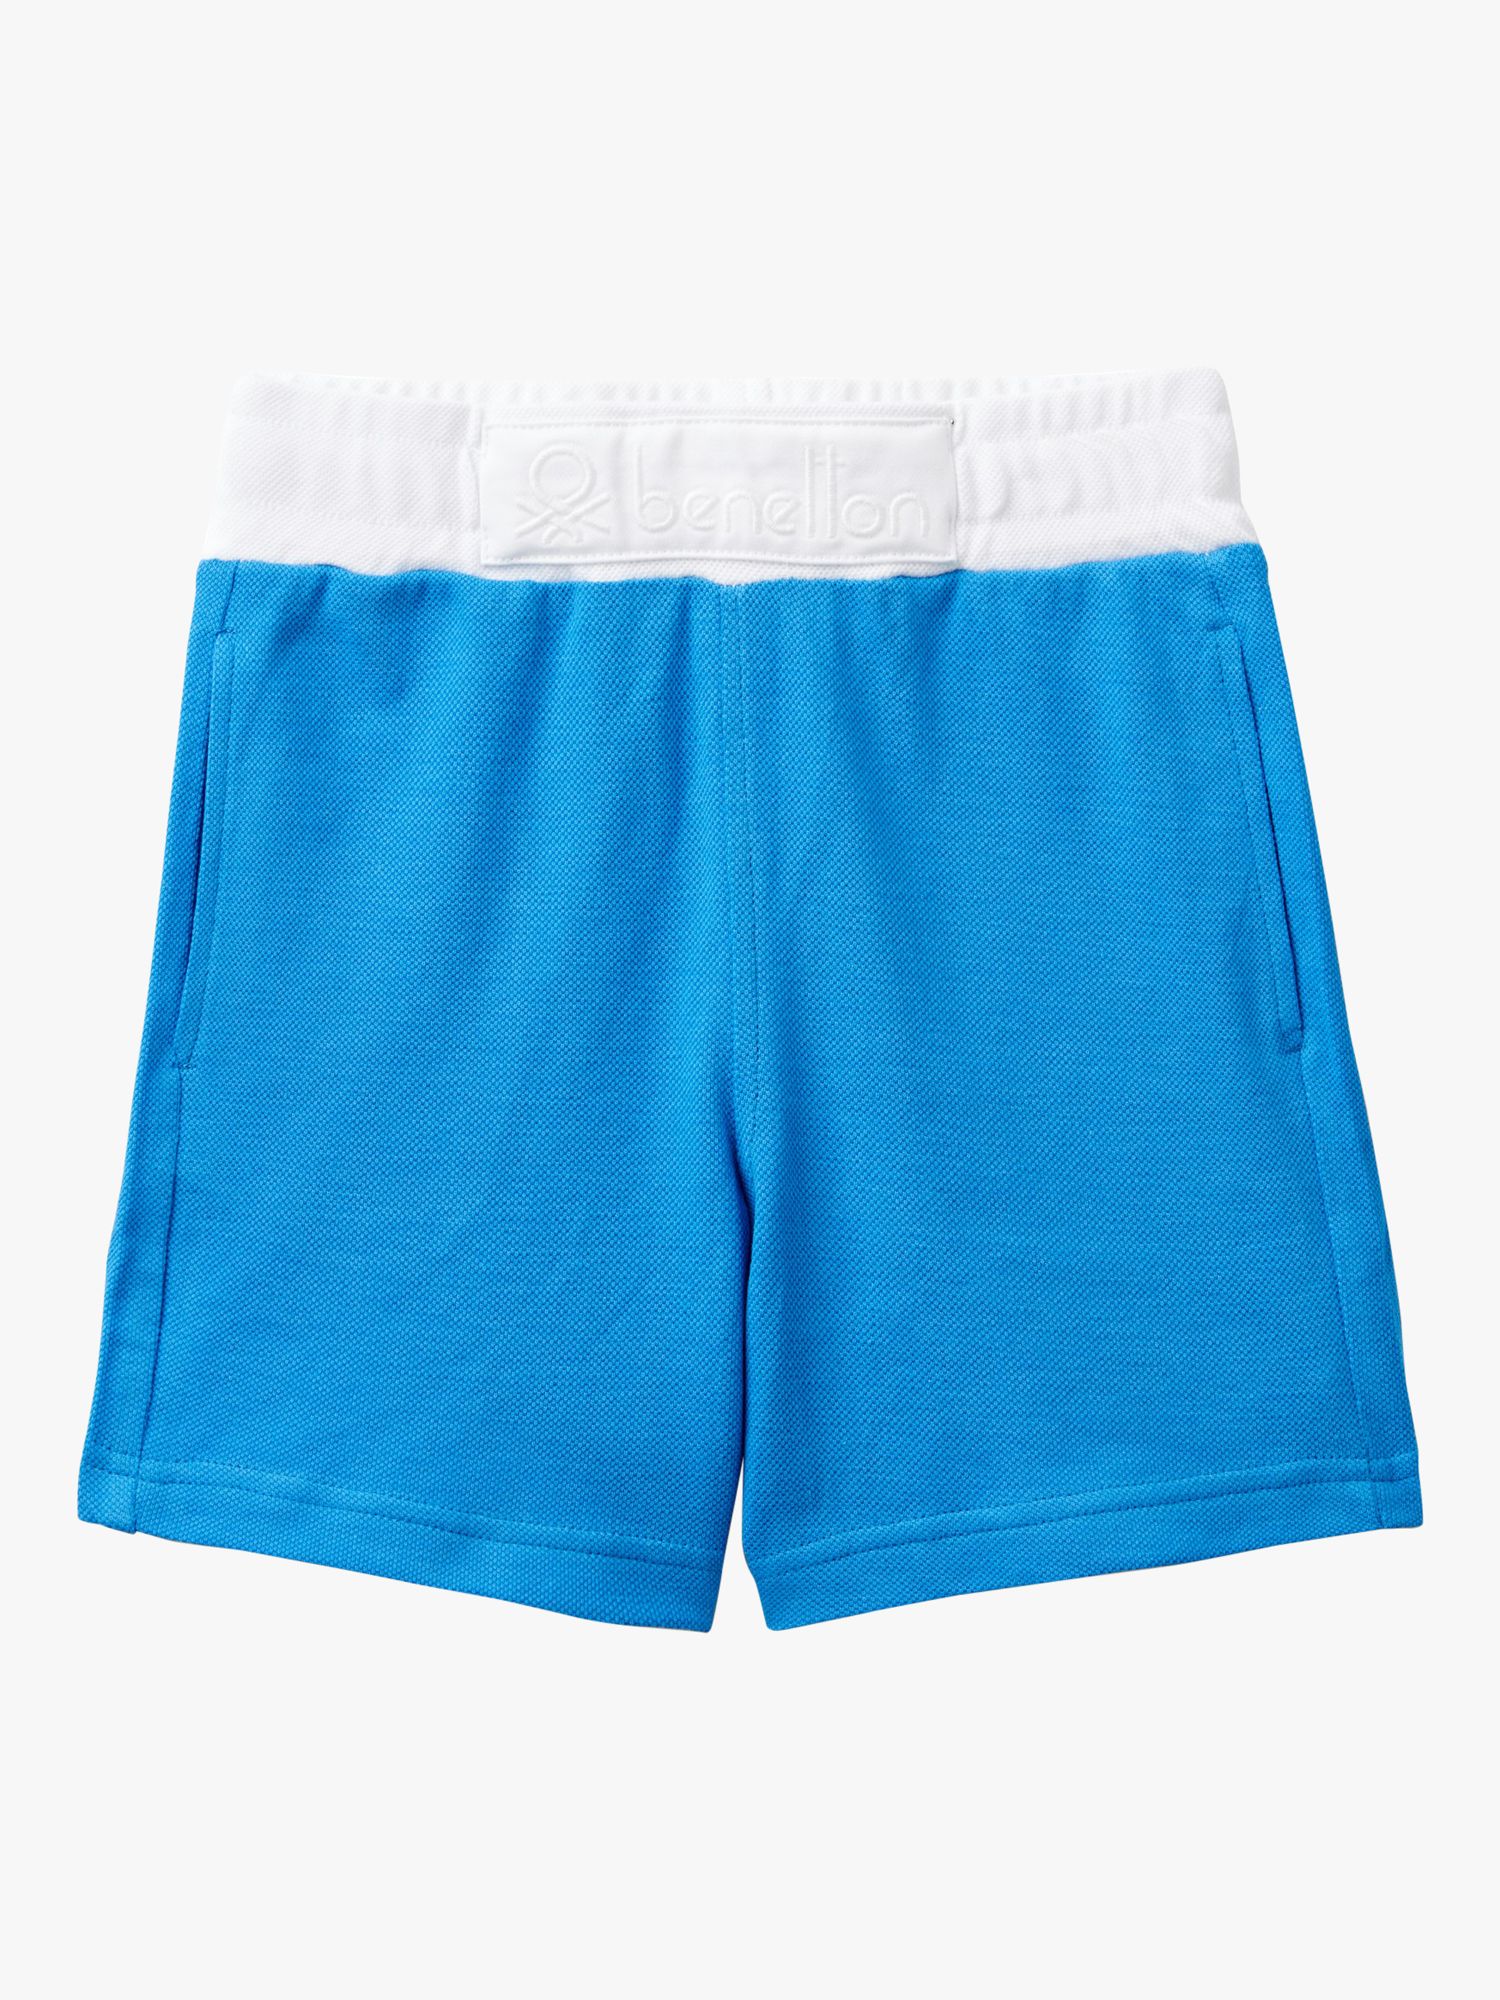 Benetton Kids' Cotton Pique Bermuda Shorts, Sky Blue, 3-4 years